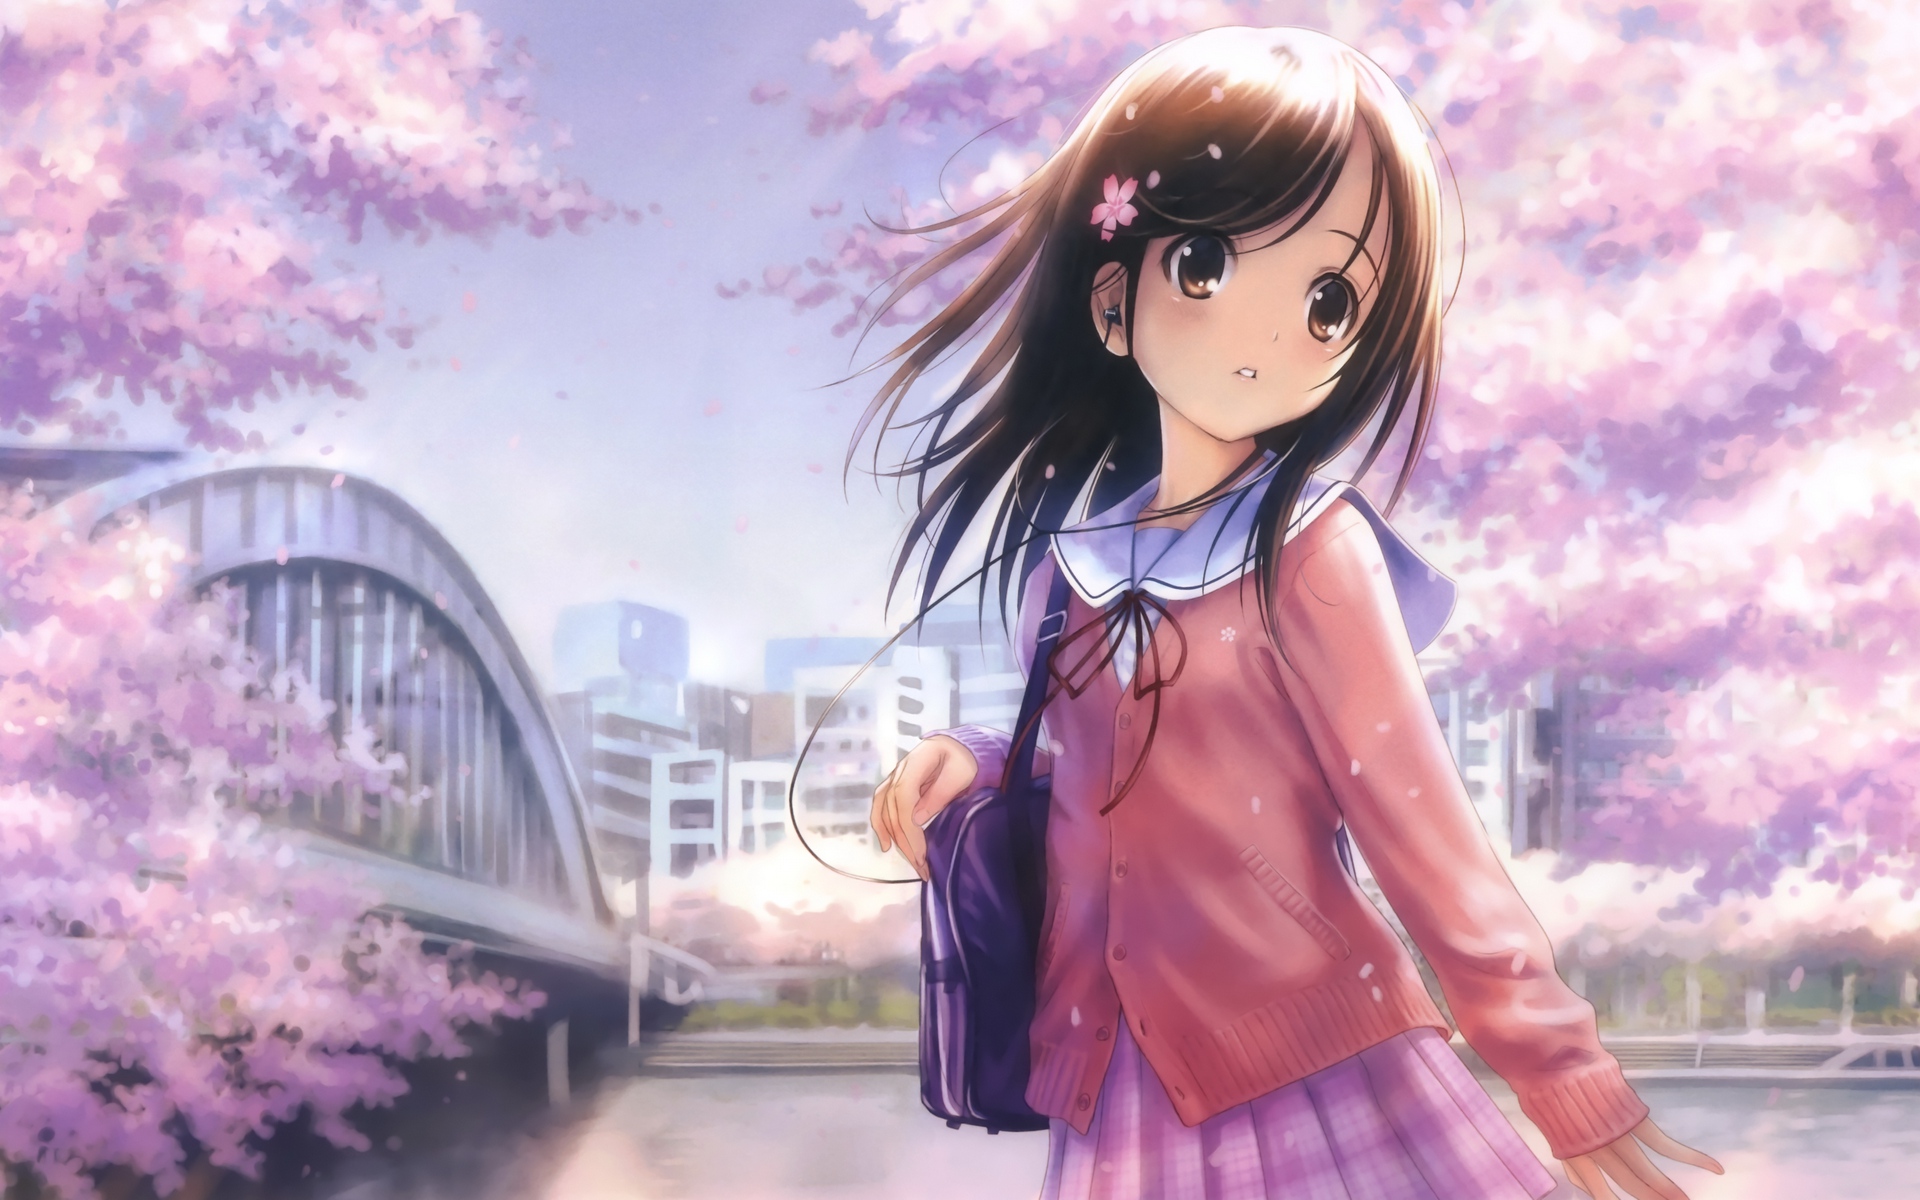 Cute Anime Girl - Anime Photo (36962610) - Fanpop